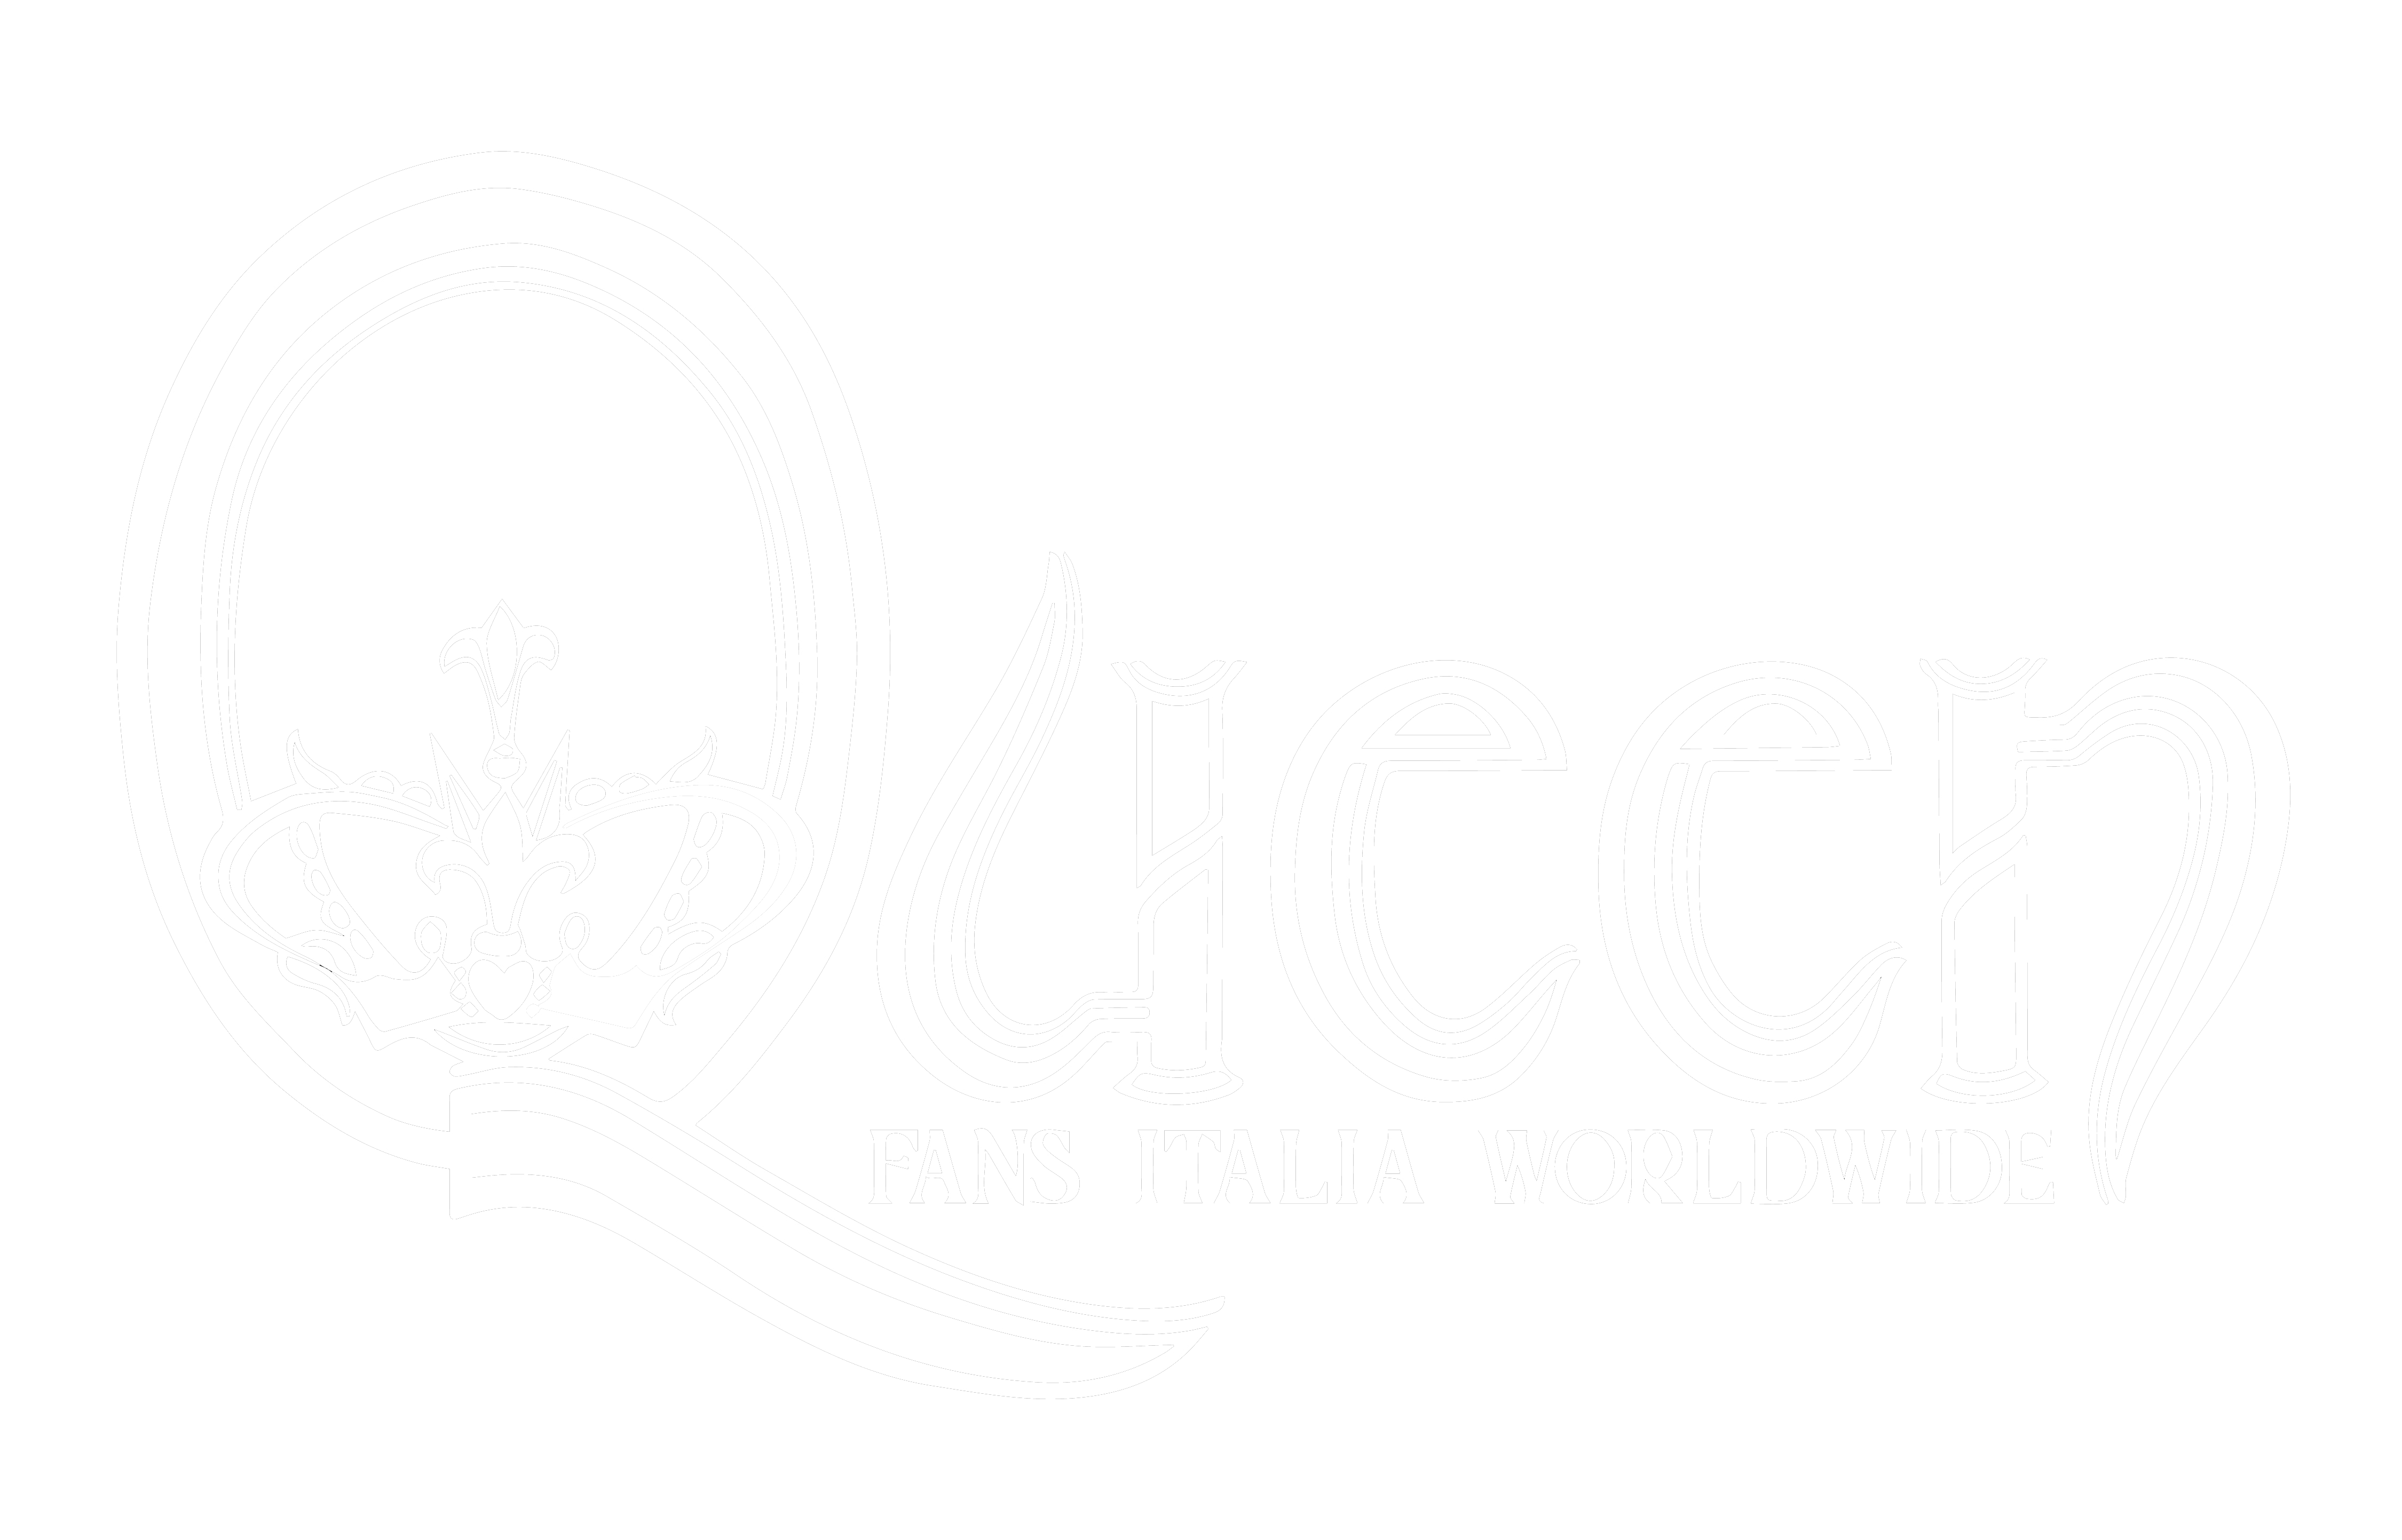 Queen Italia Fans Worldwide